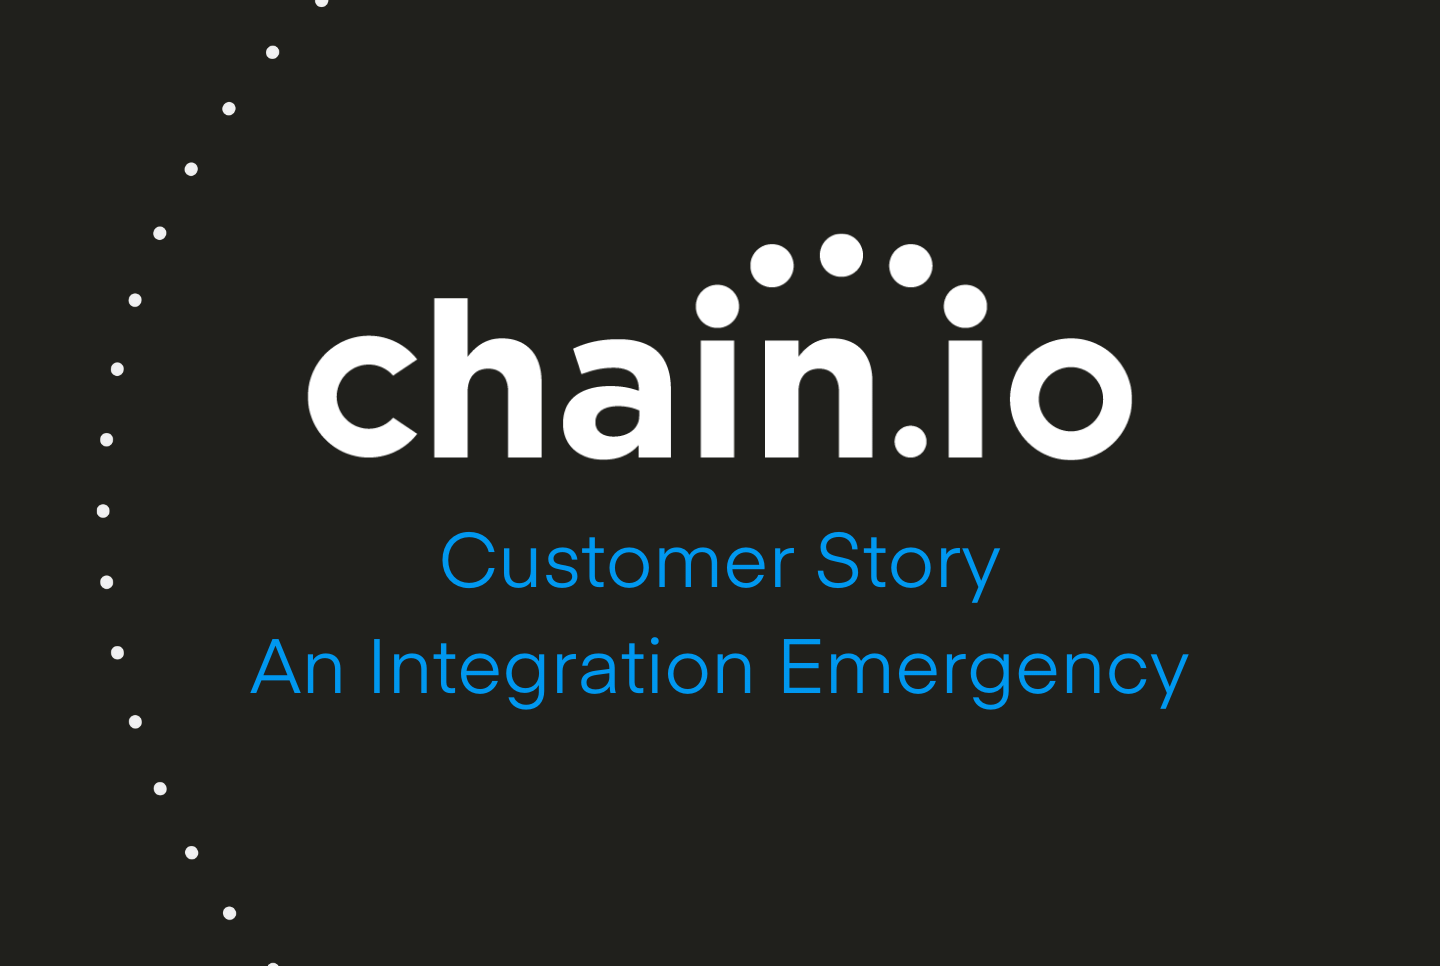 Chain.io Customer Story, Integration Emergency